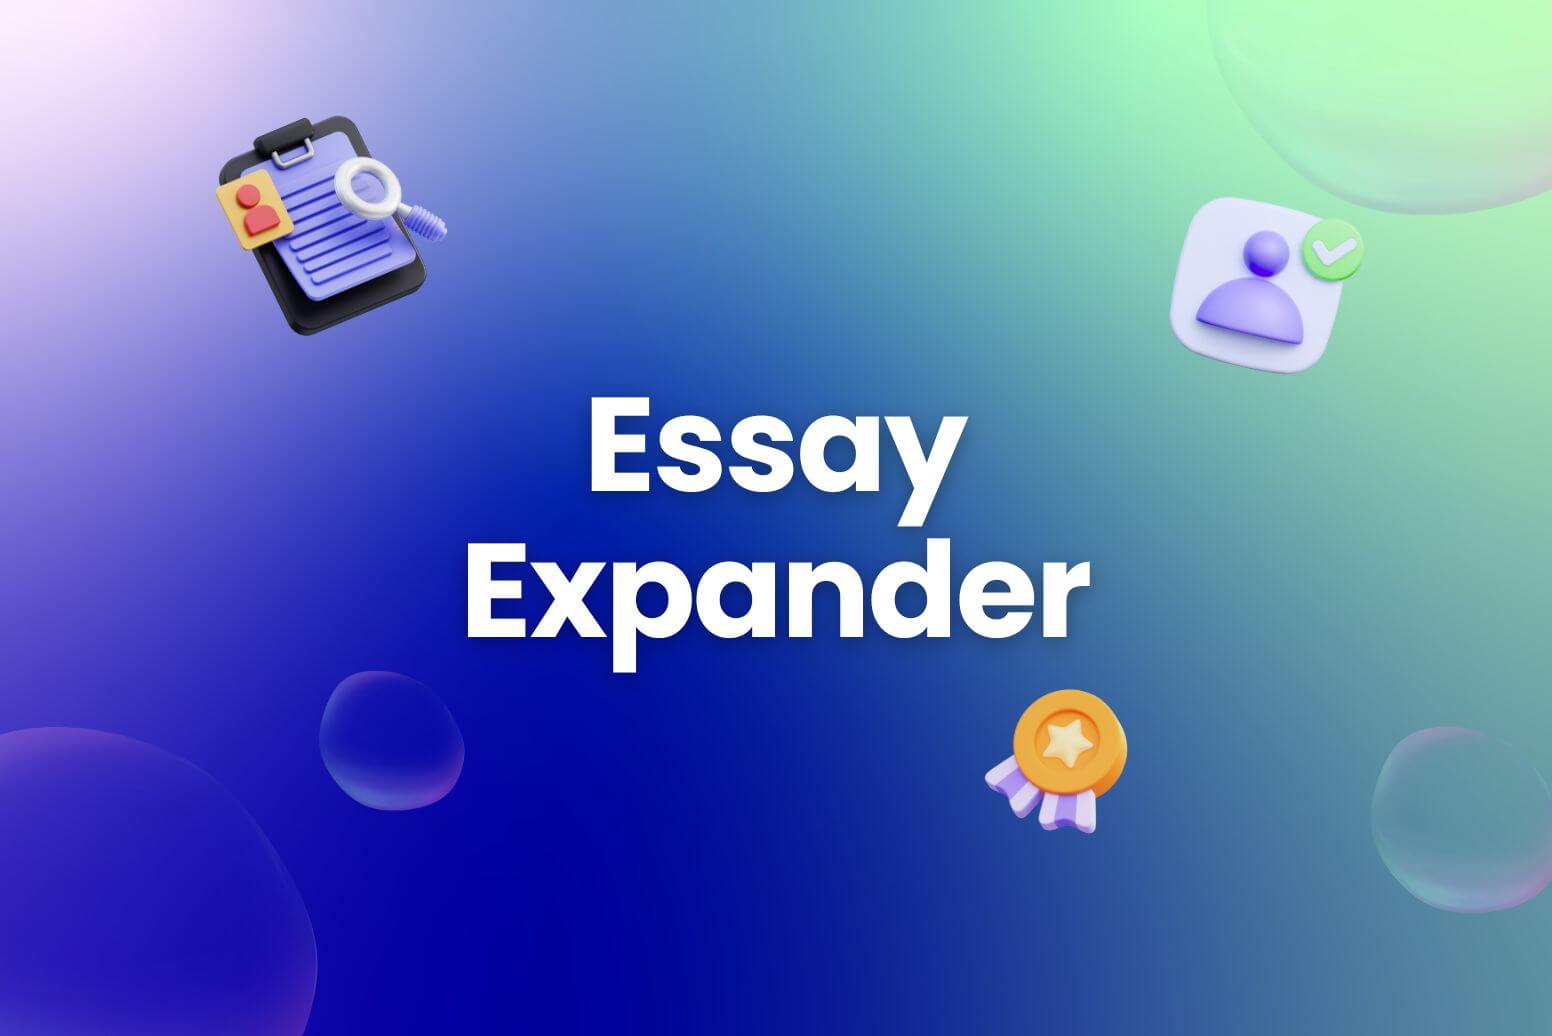 Essay Expander